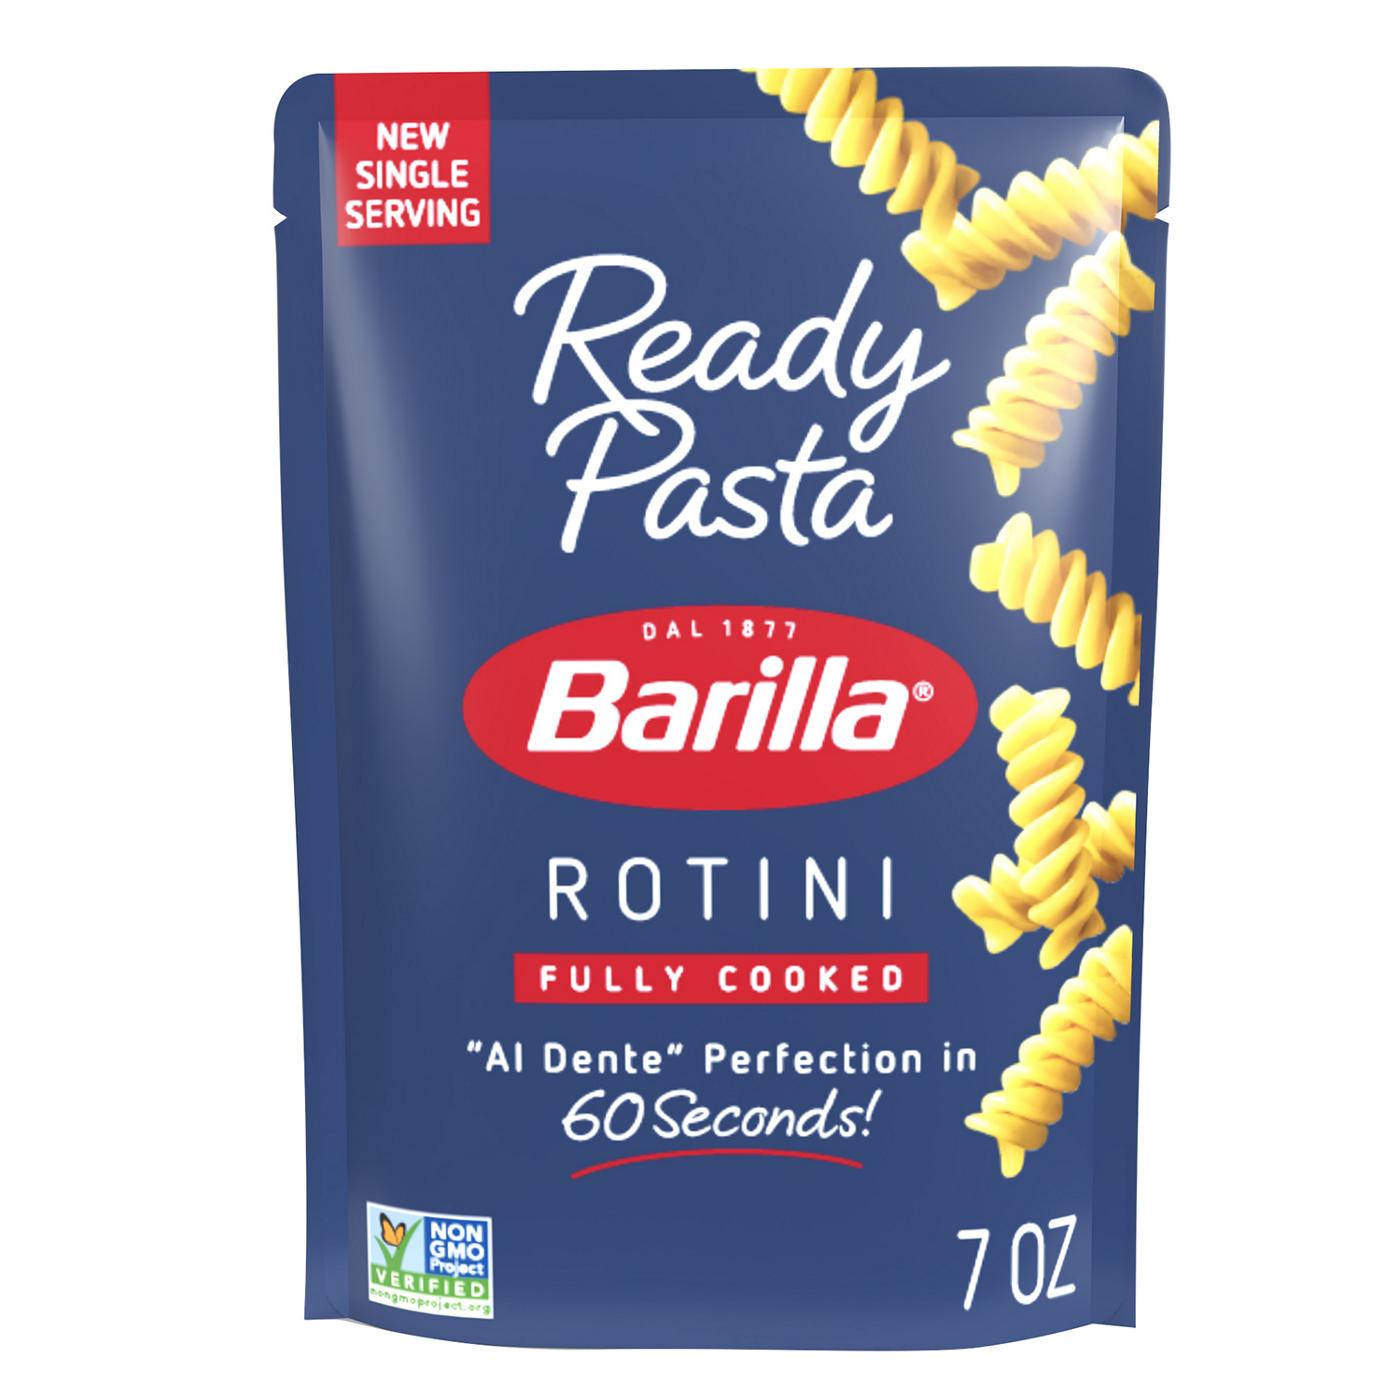 Barilla Ready Pasta Rotini; image 1 of 5